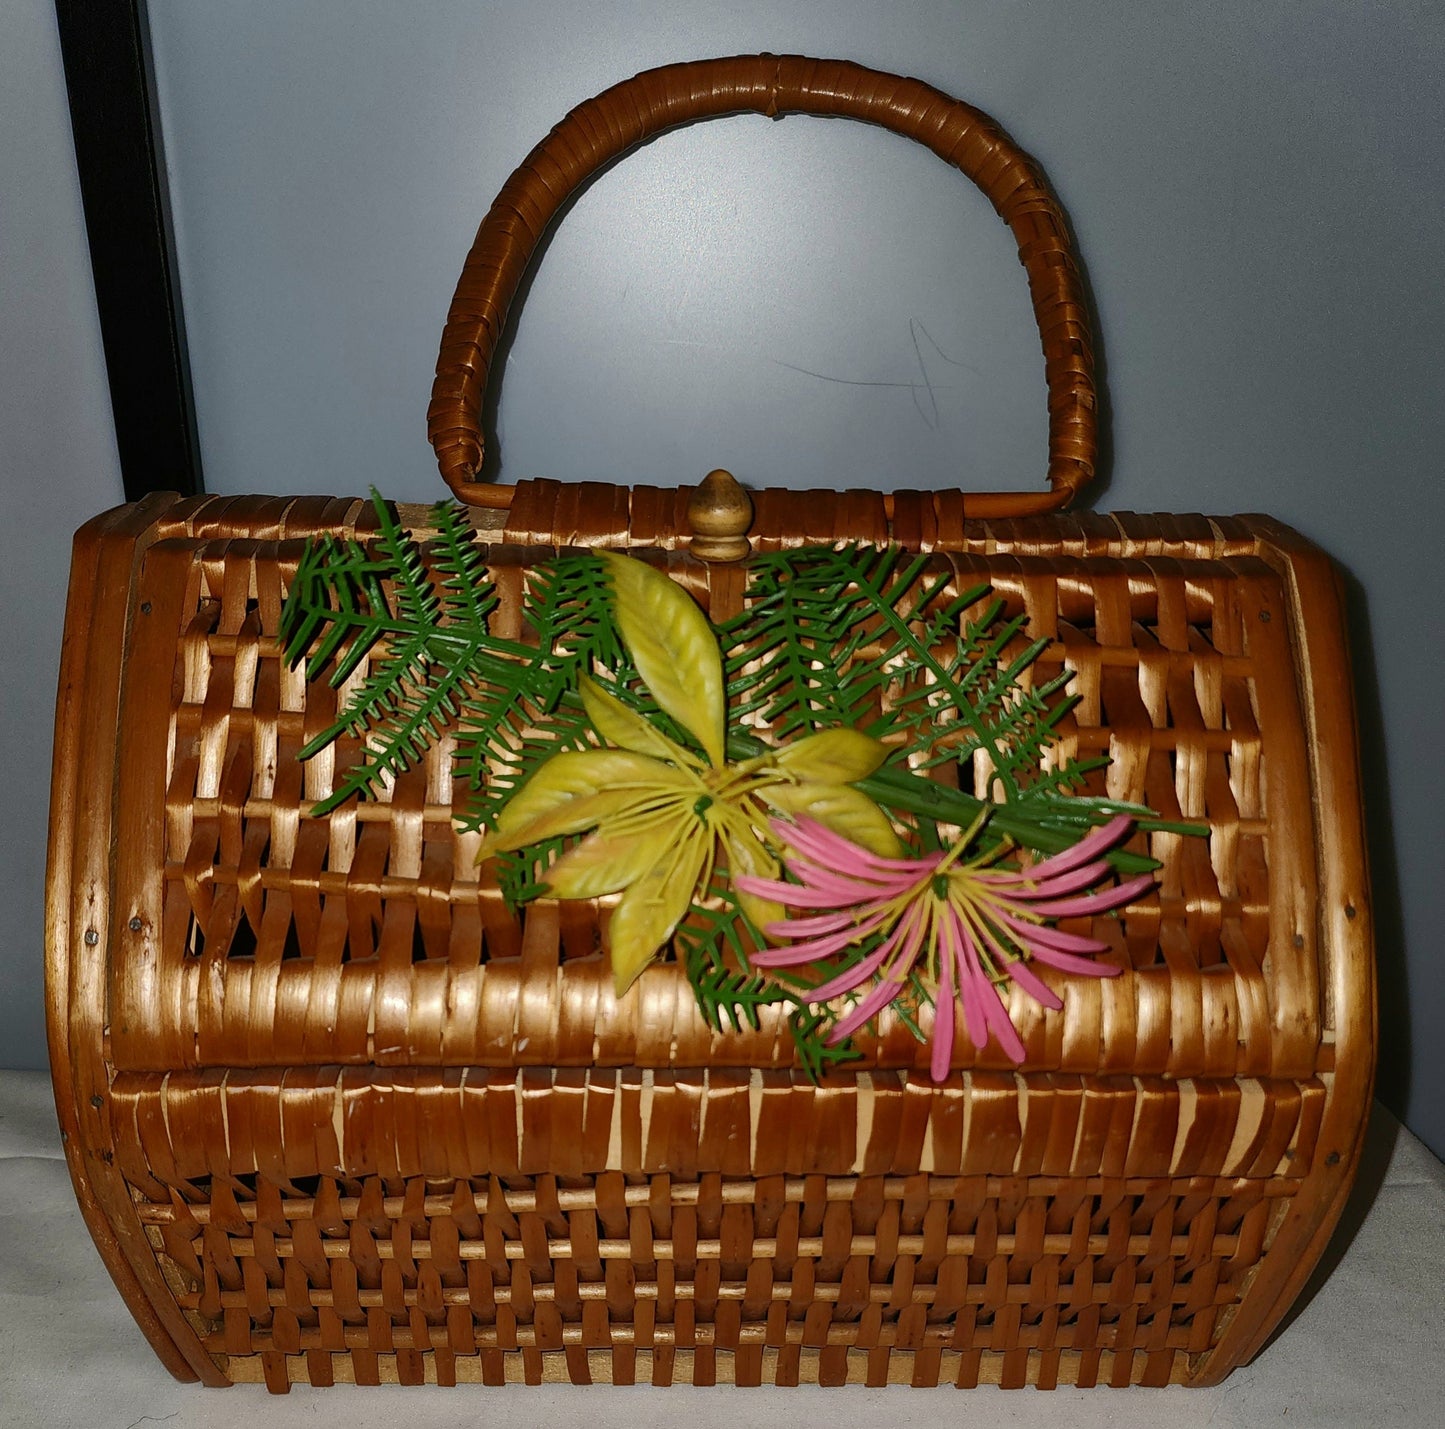 Vintage Basket Purse 1950s Wood Straw Rattan Wicker Basket Box Purse Plastic Flowers Mid Century Rockabilly some damage